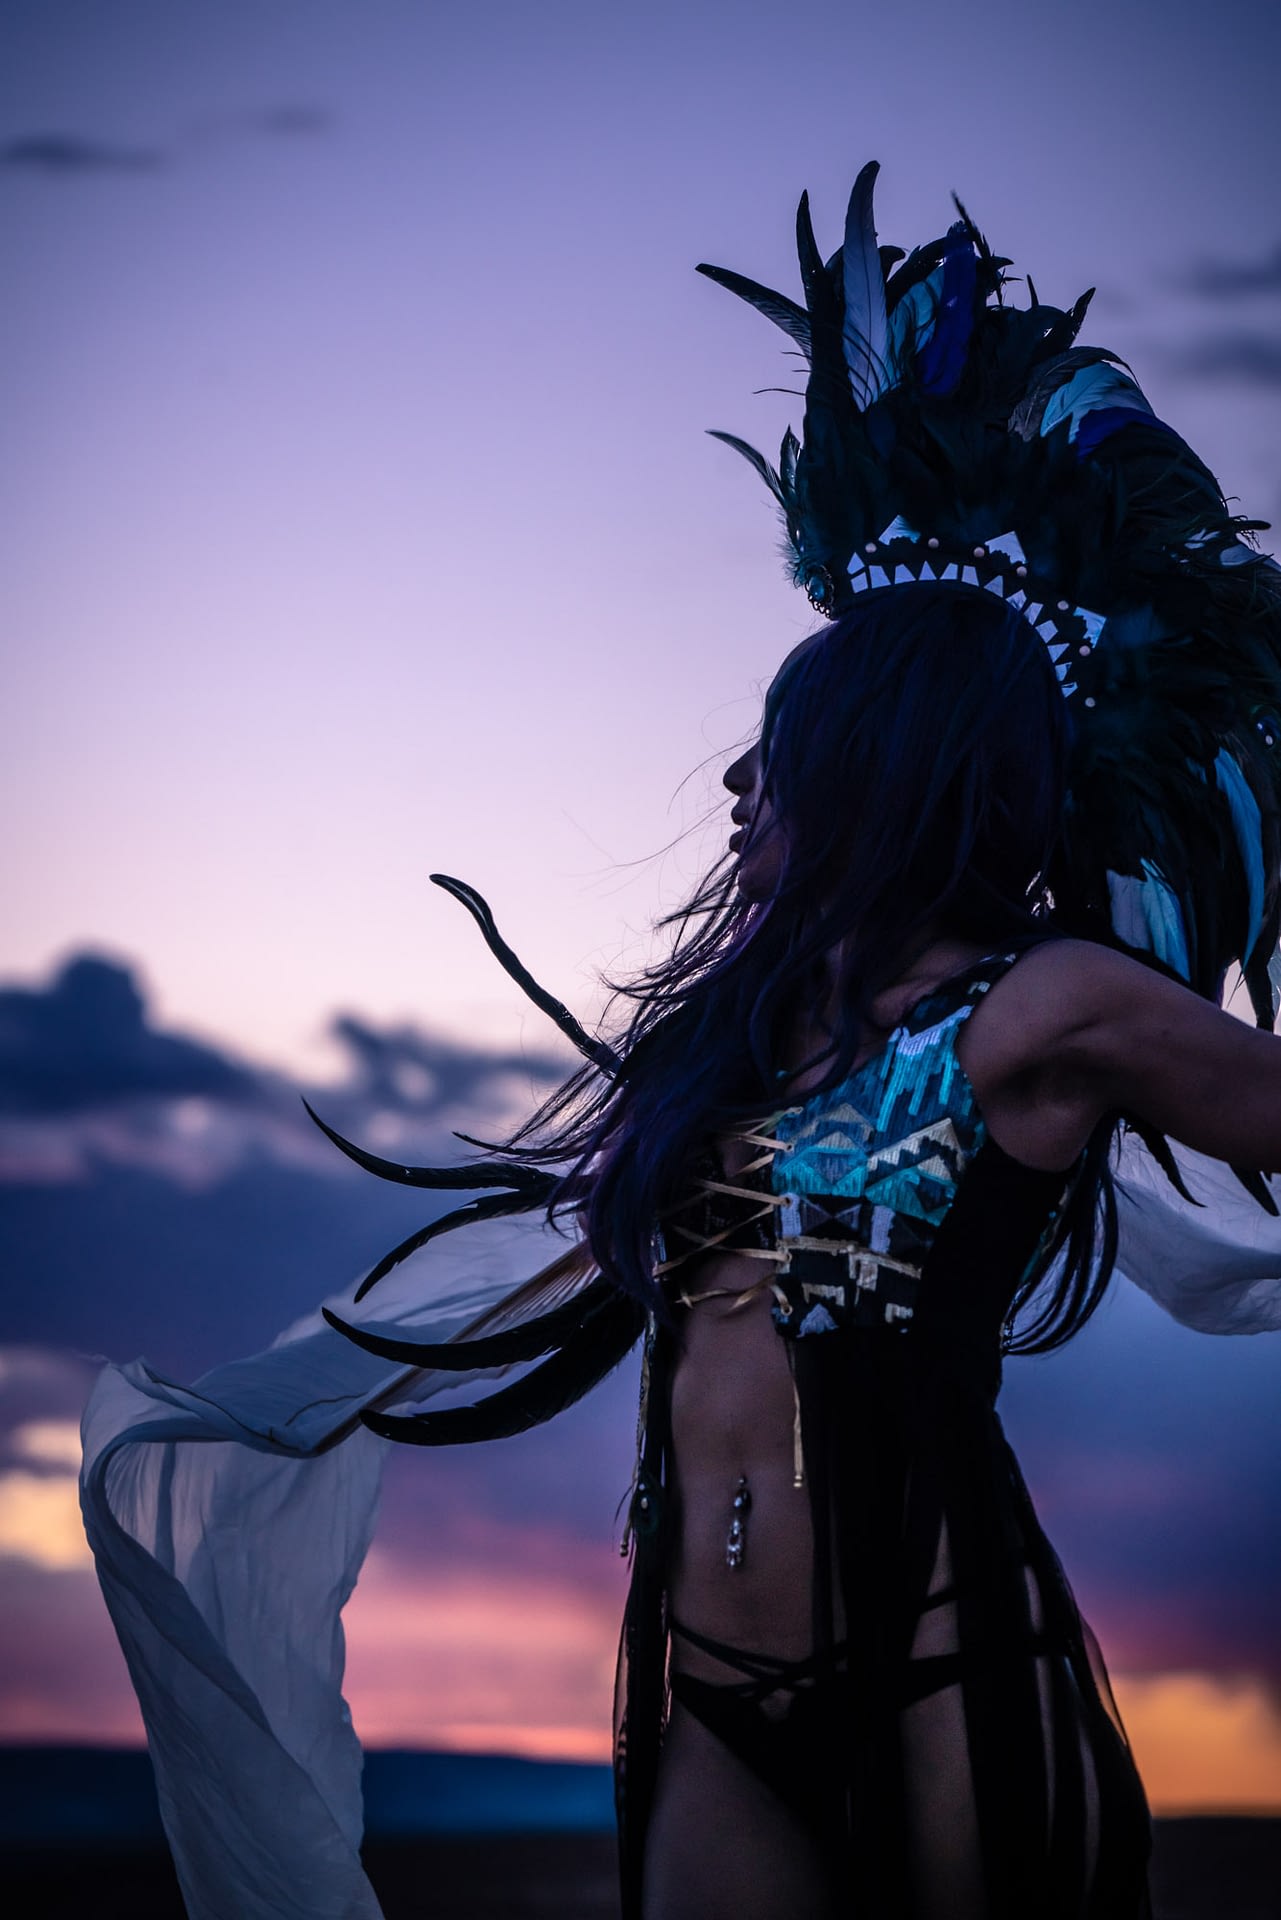 arizona sunset dance goddess couture dress mohawk